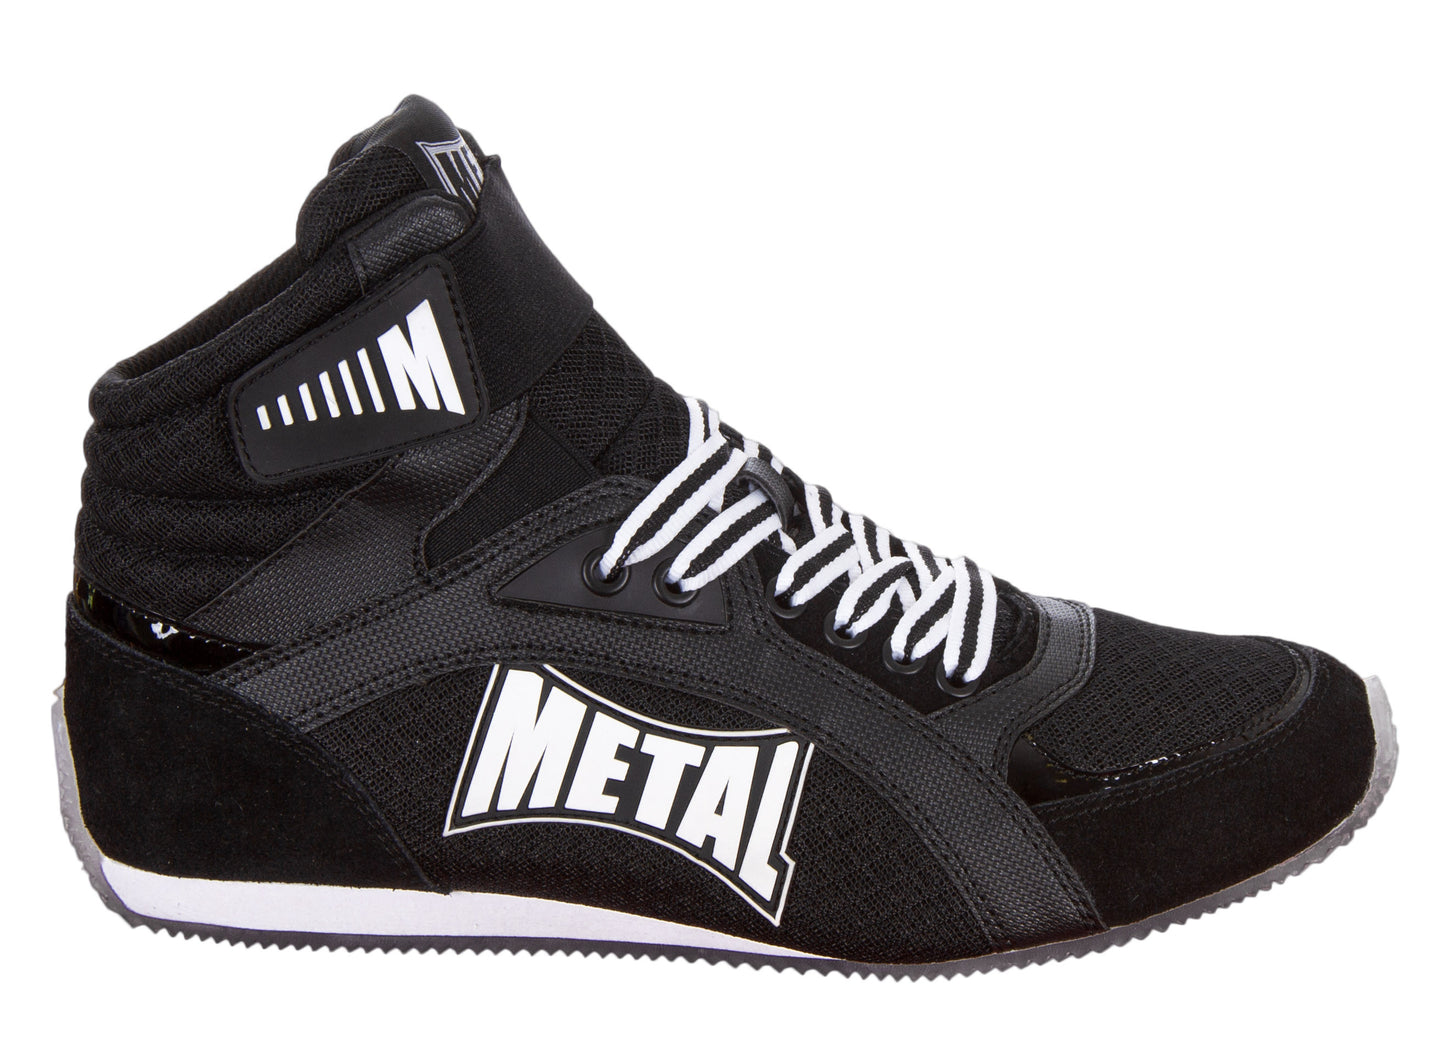 Chaussures basses Viper Metal Boxe - Noir